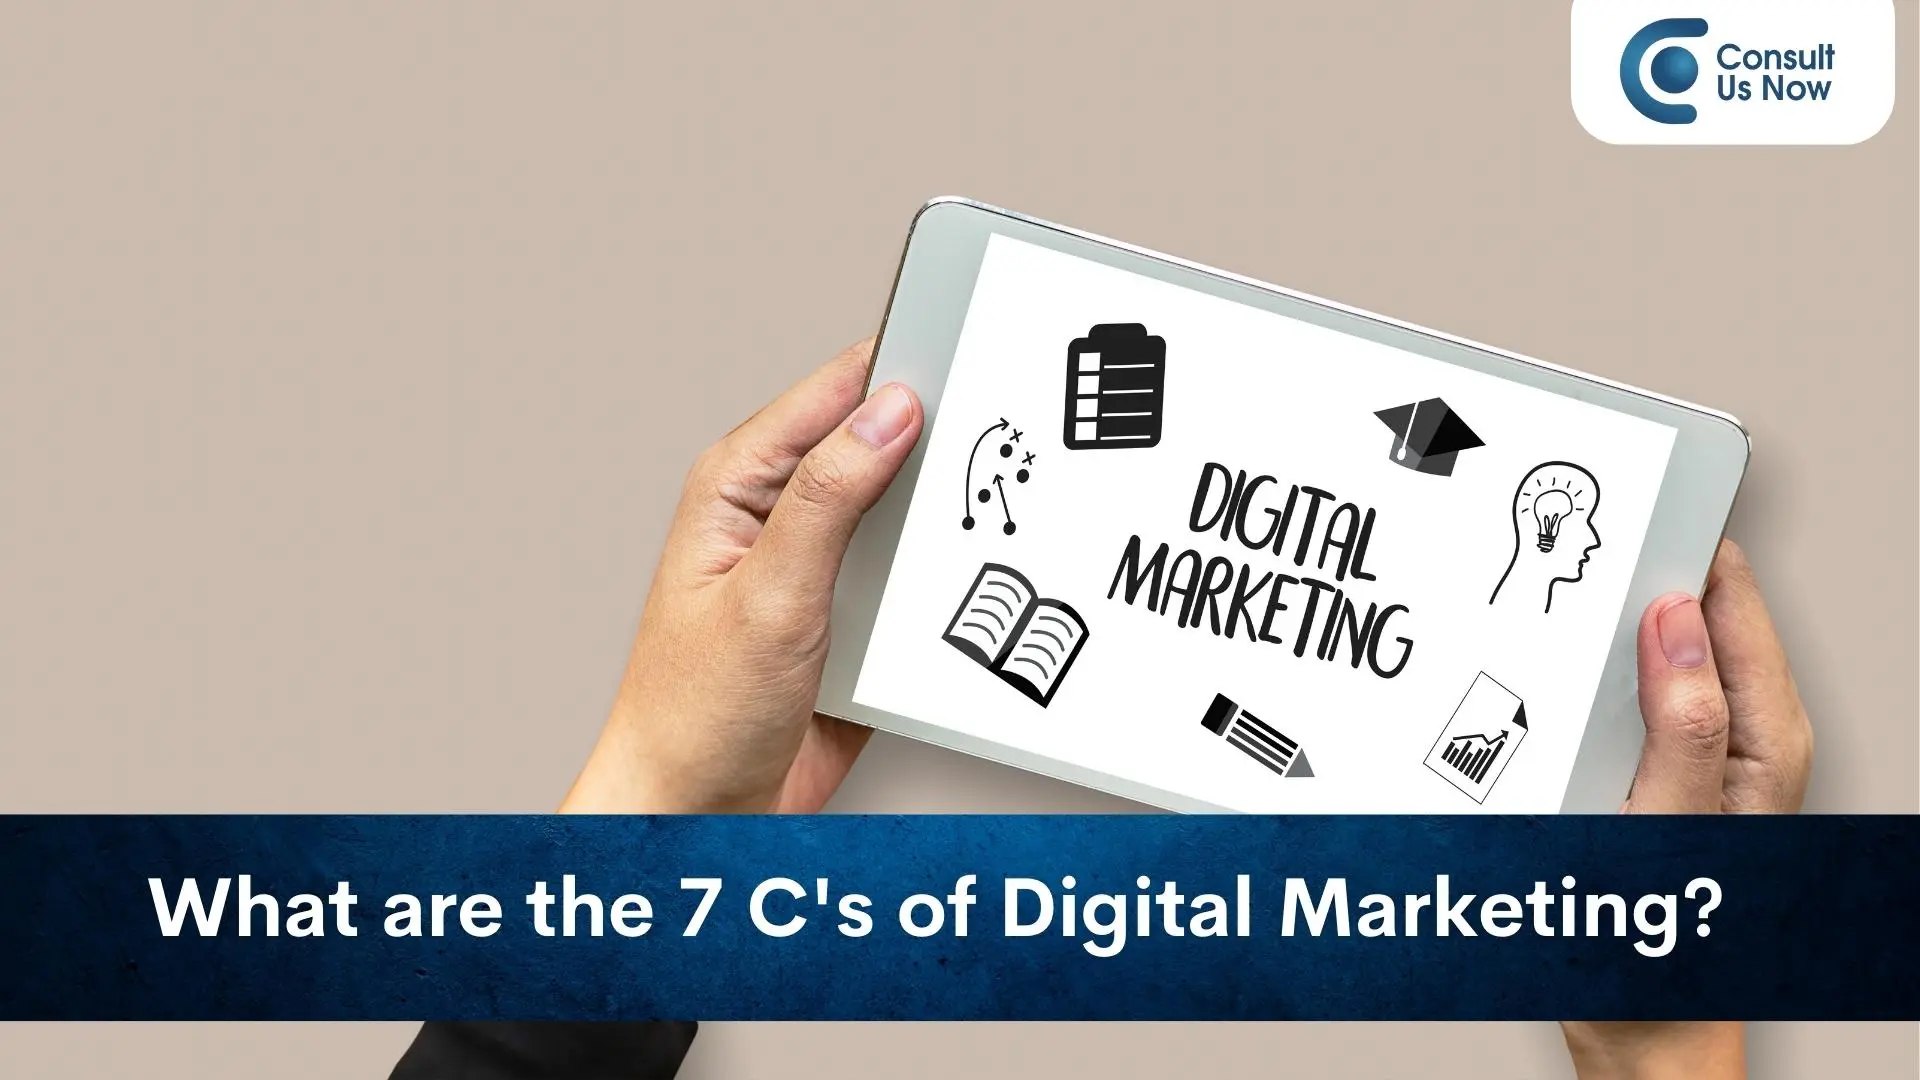 7C's of Digital Marketing